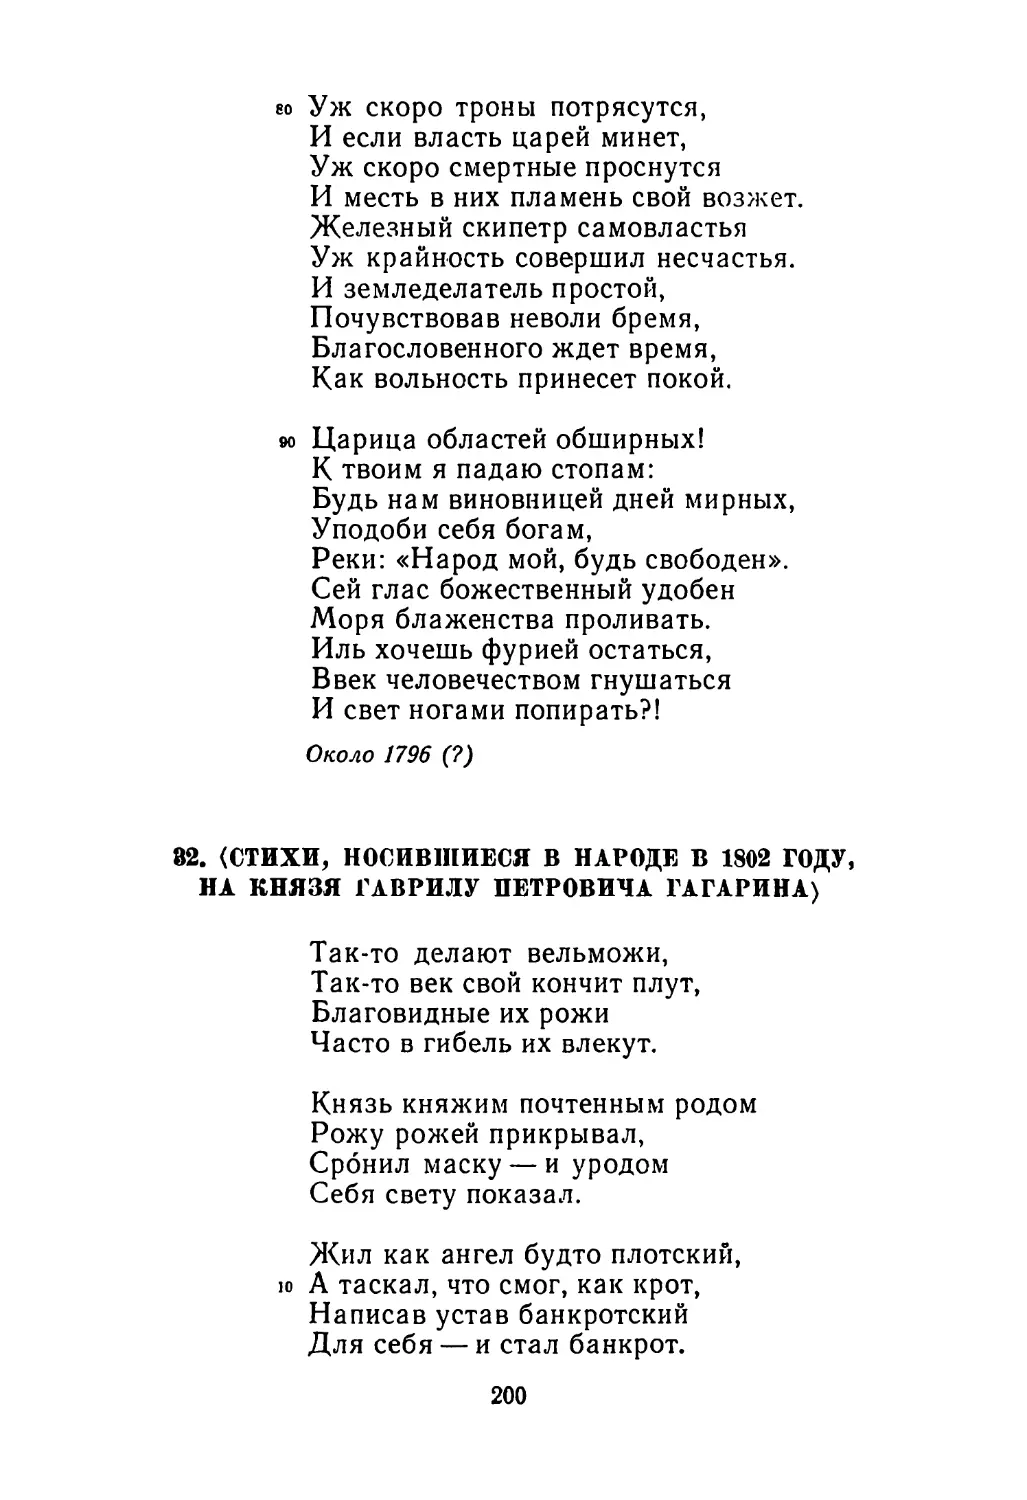 32. <Стихи, носившиеся в народе в 1802 году, на князя Гаврилу Петровича Гагарина>